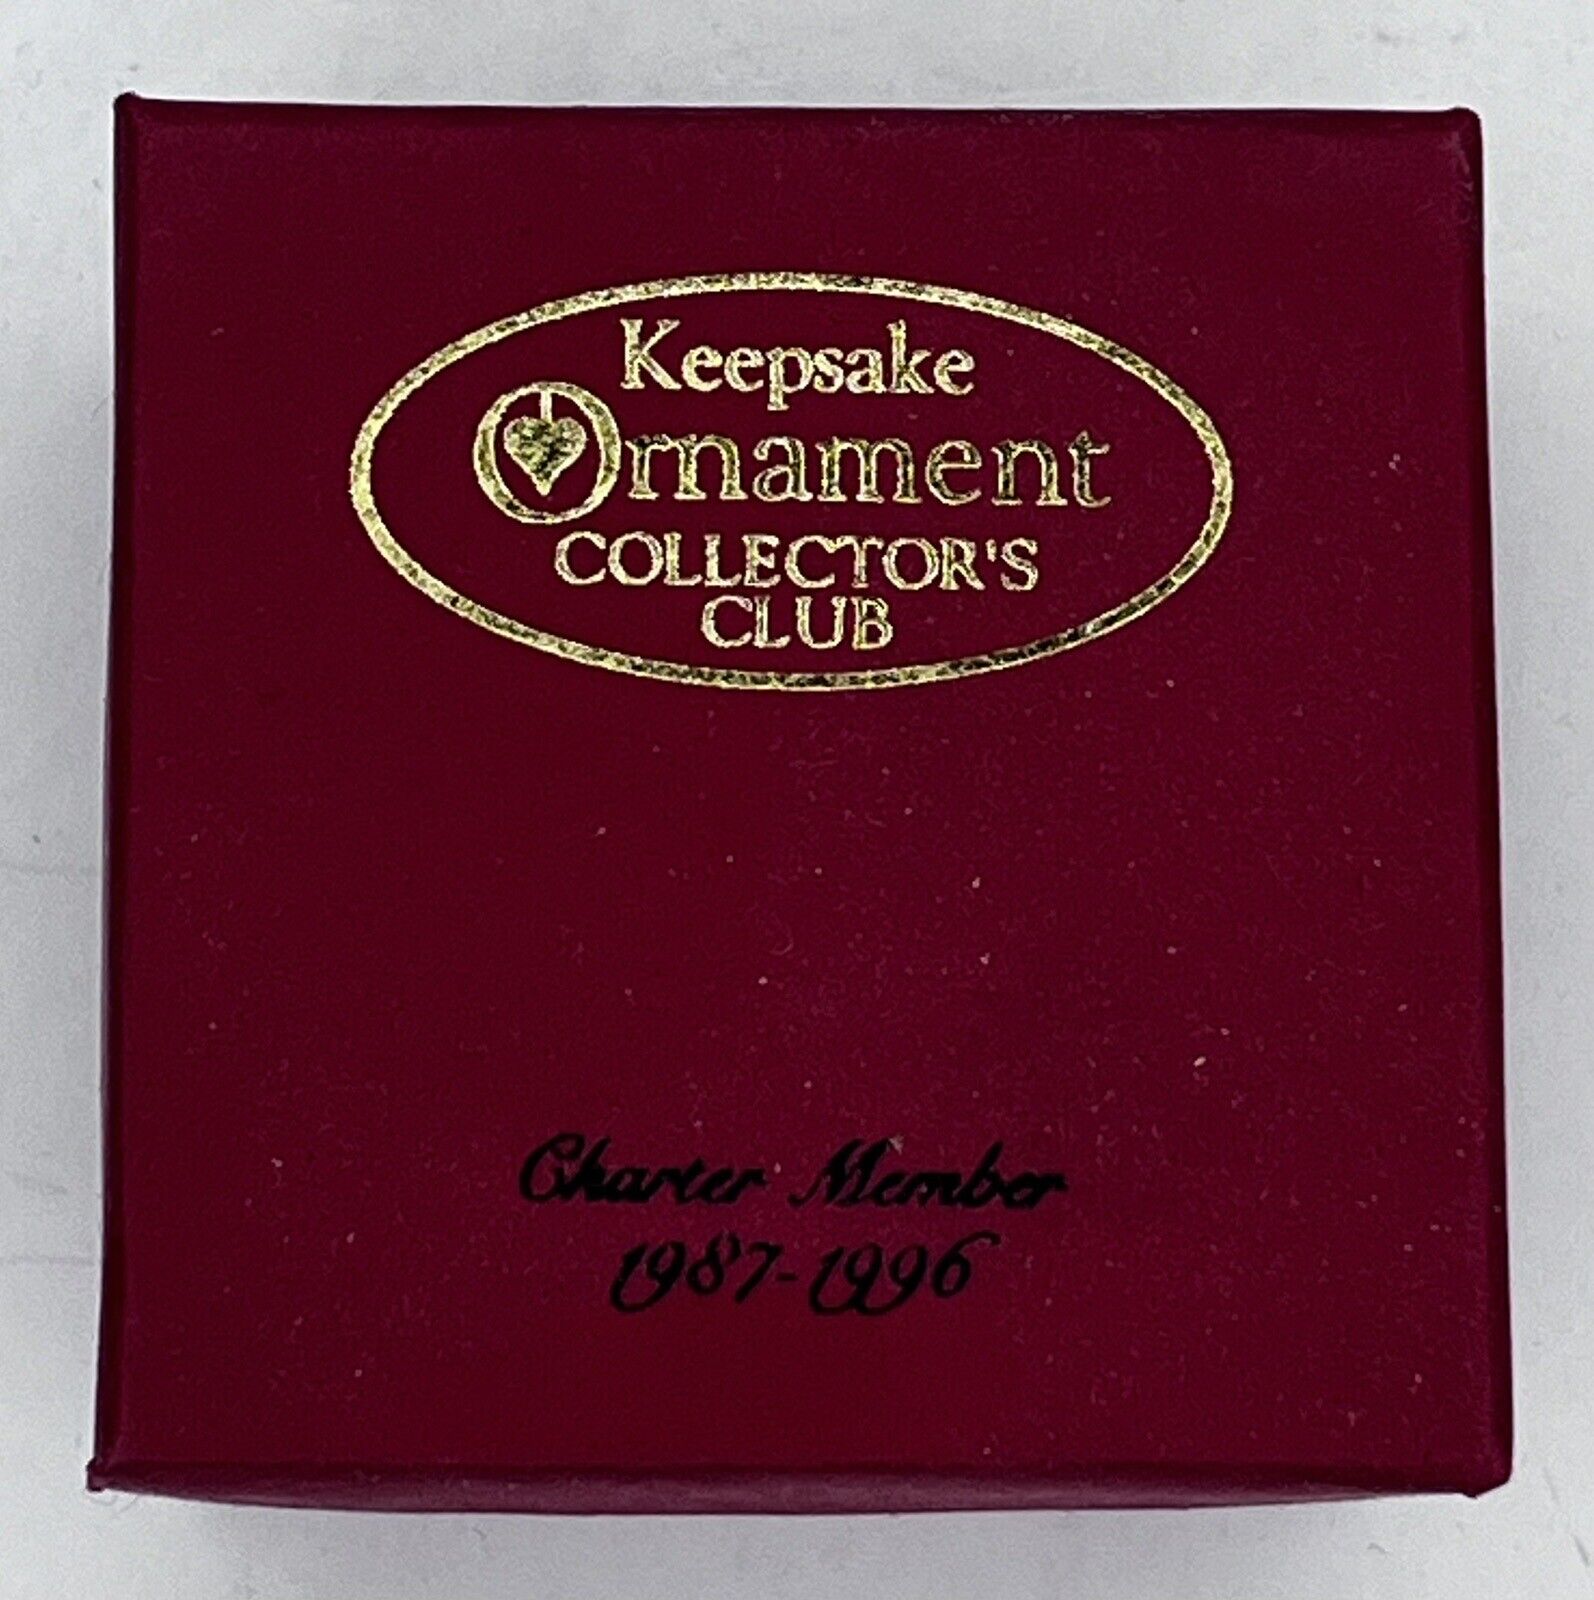 Hallmark Keepsake Collector's Club, Charter Member, Collector's Club Pin 1987-96